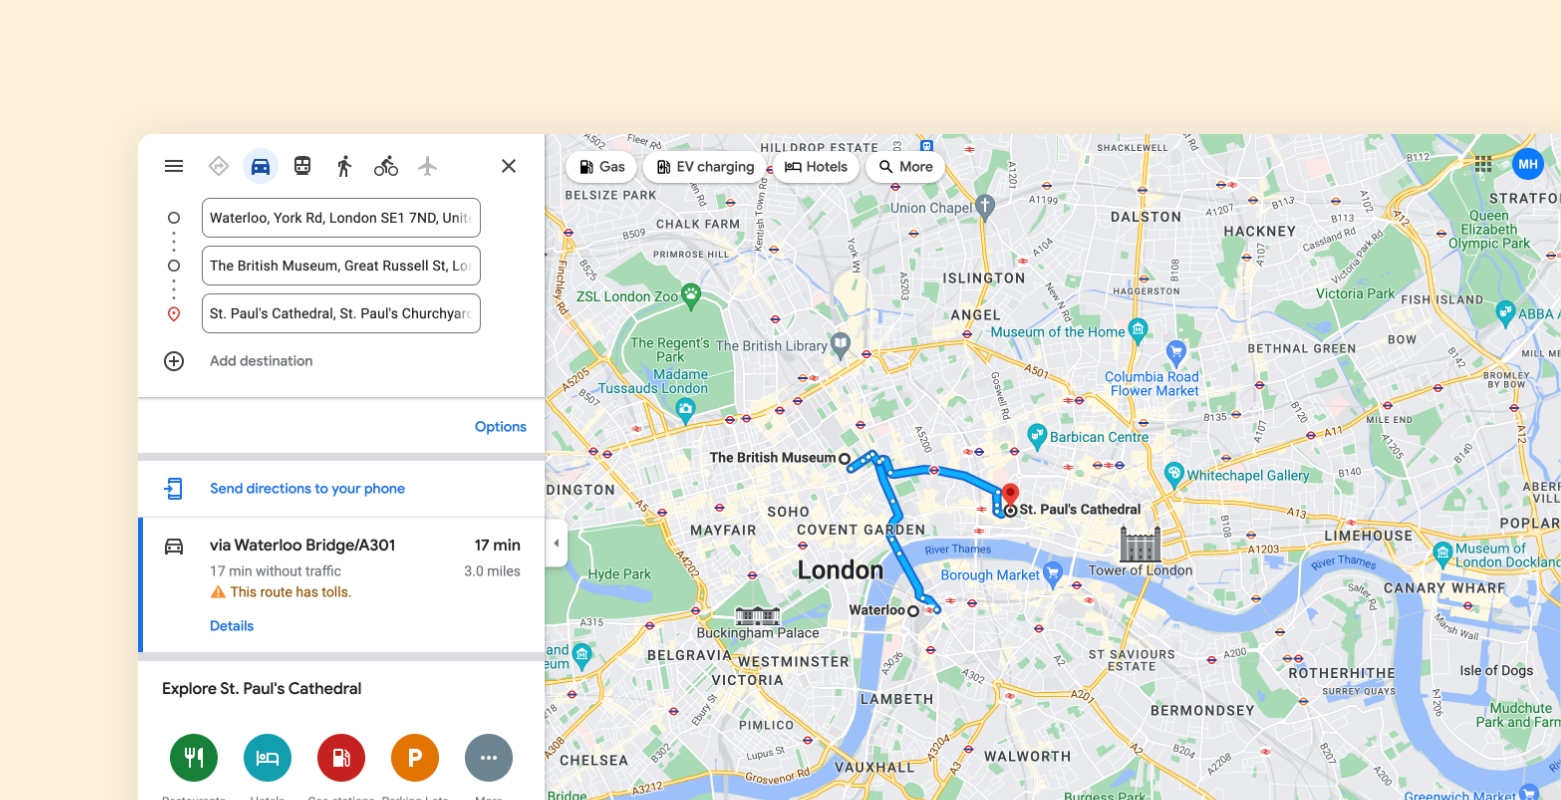 Google Maps interface